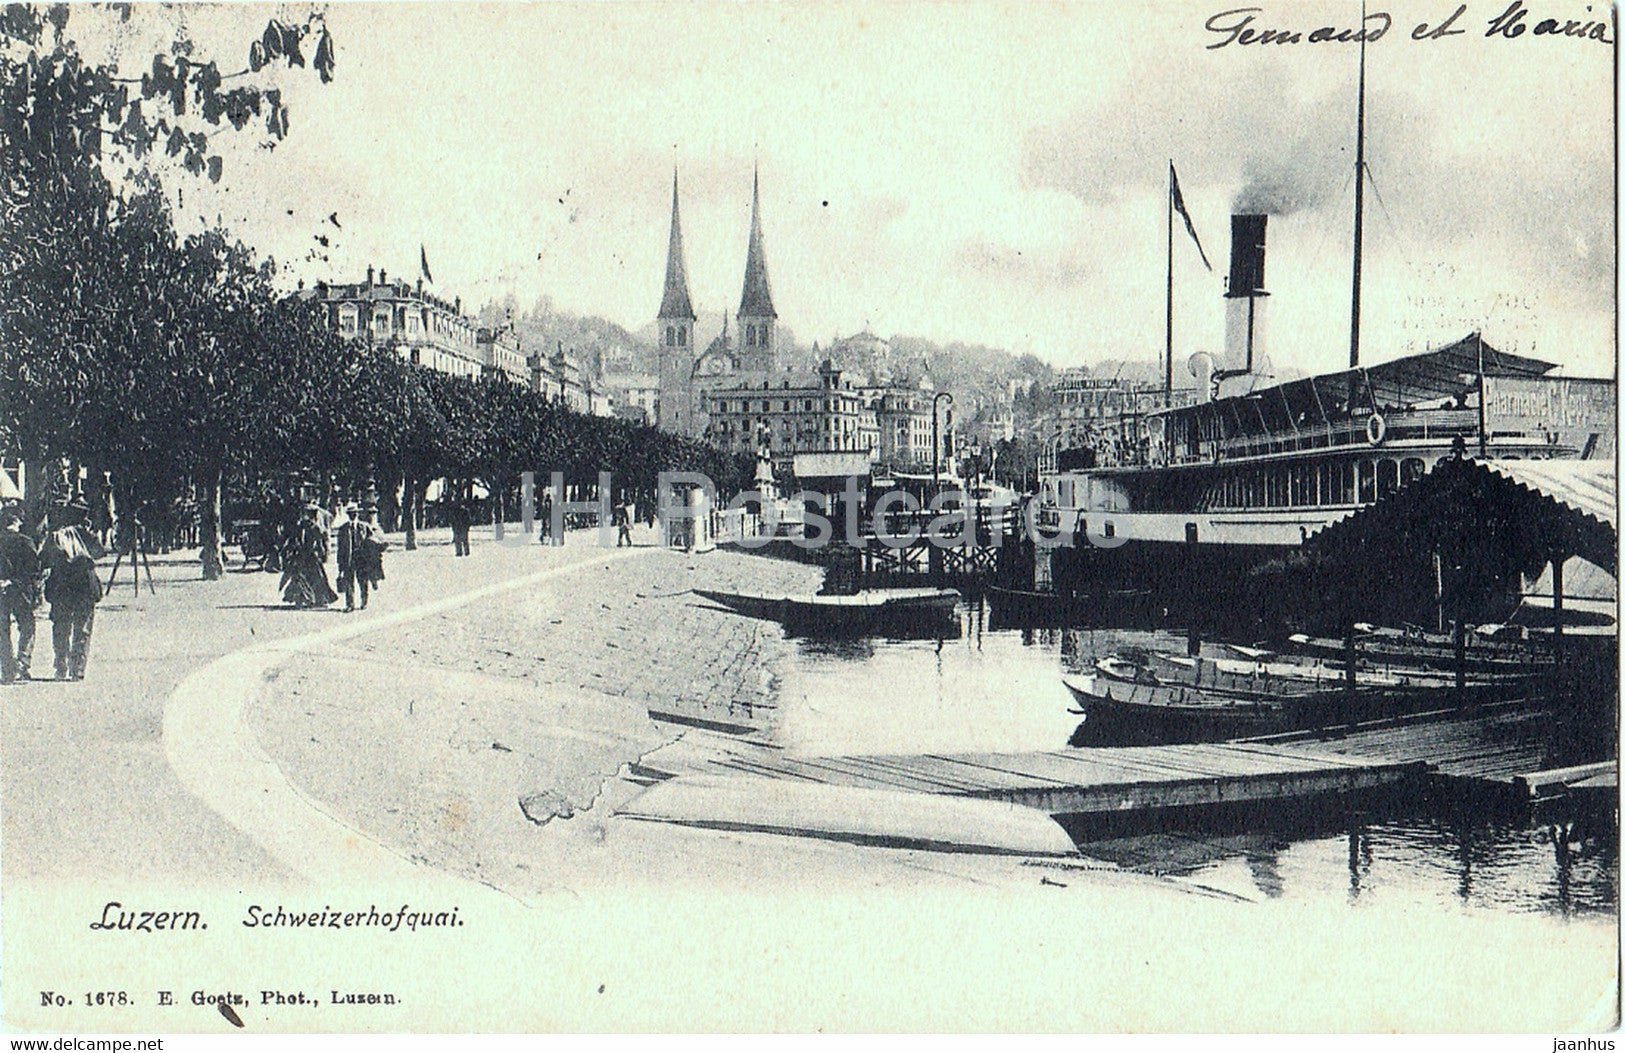 Luzern - Lucerne - Schweizerhofquai - steamer - ship - old postcard - 1910 - Switzerland - used - JH Postcards